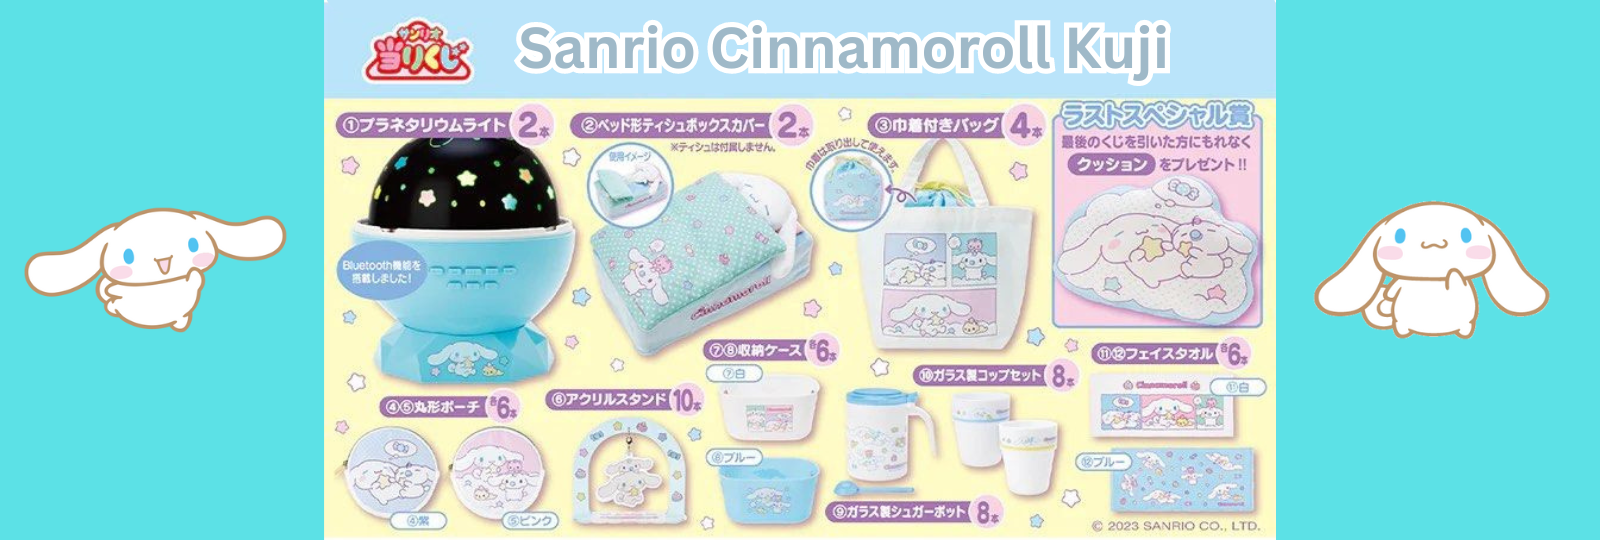 Sanrio Cinnamoroll Kuji